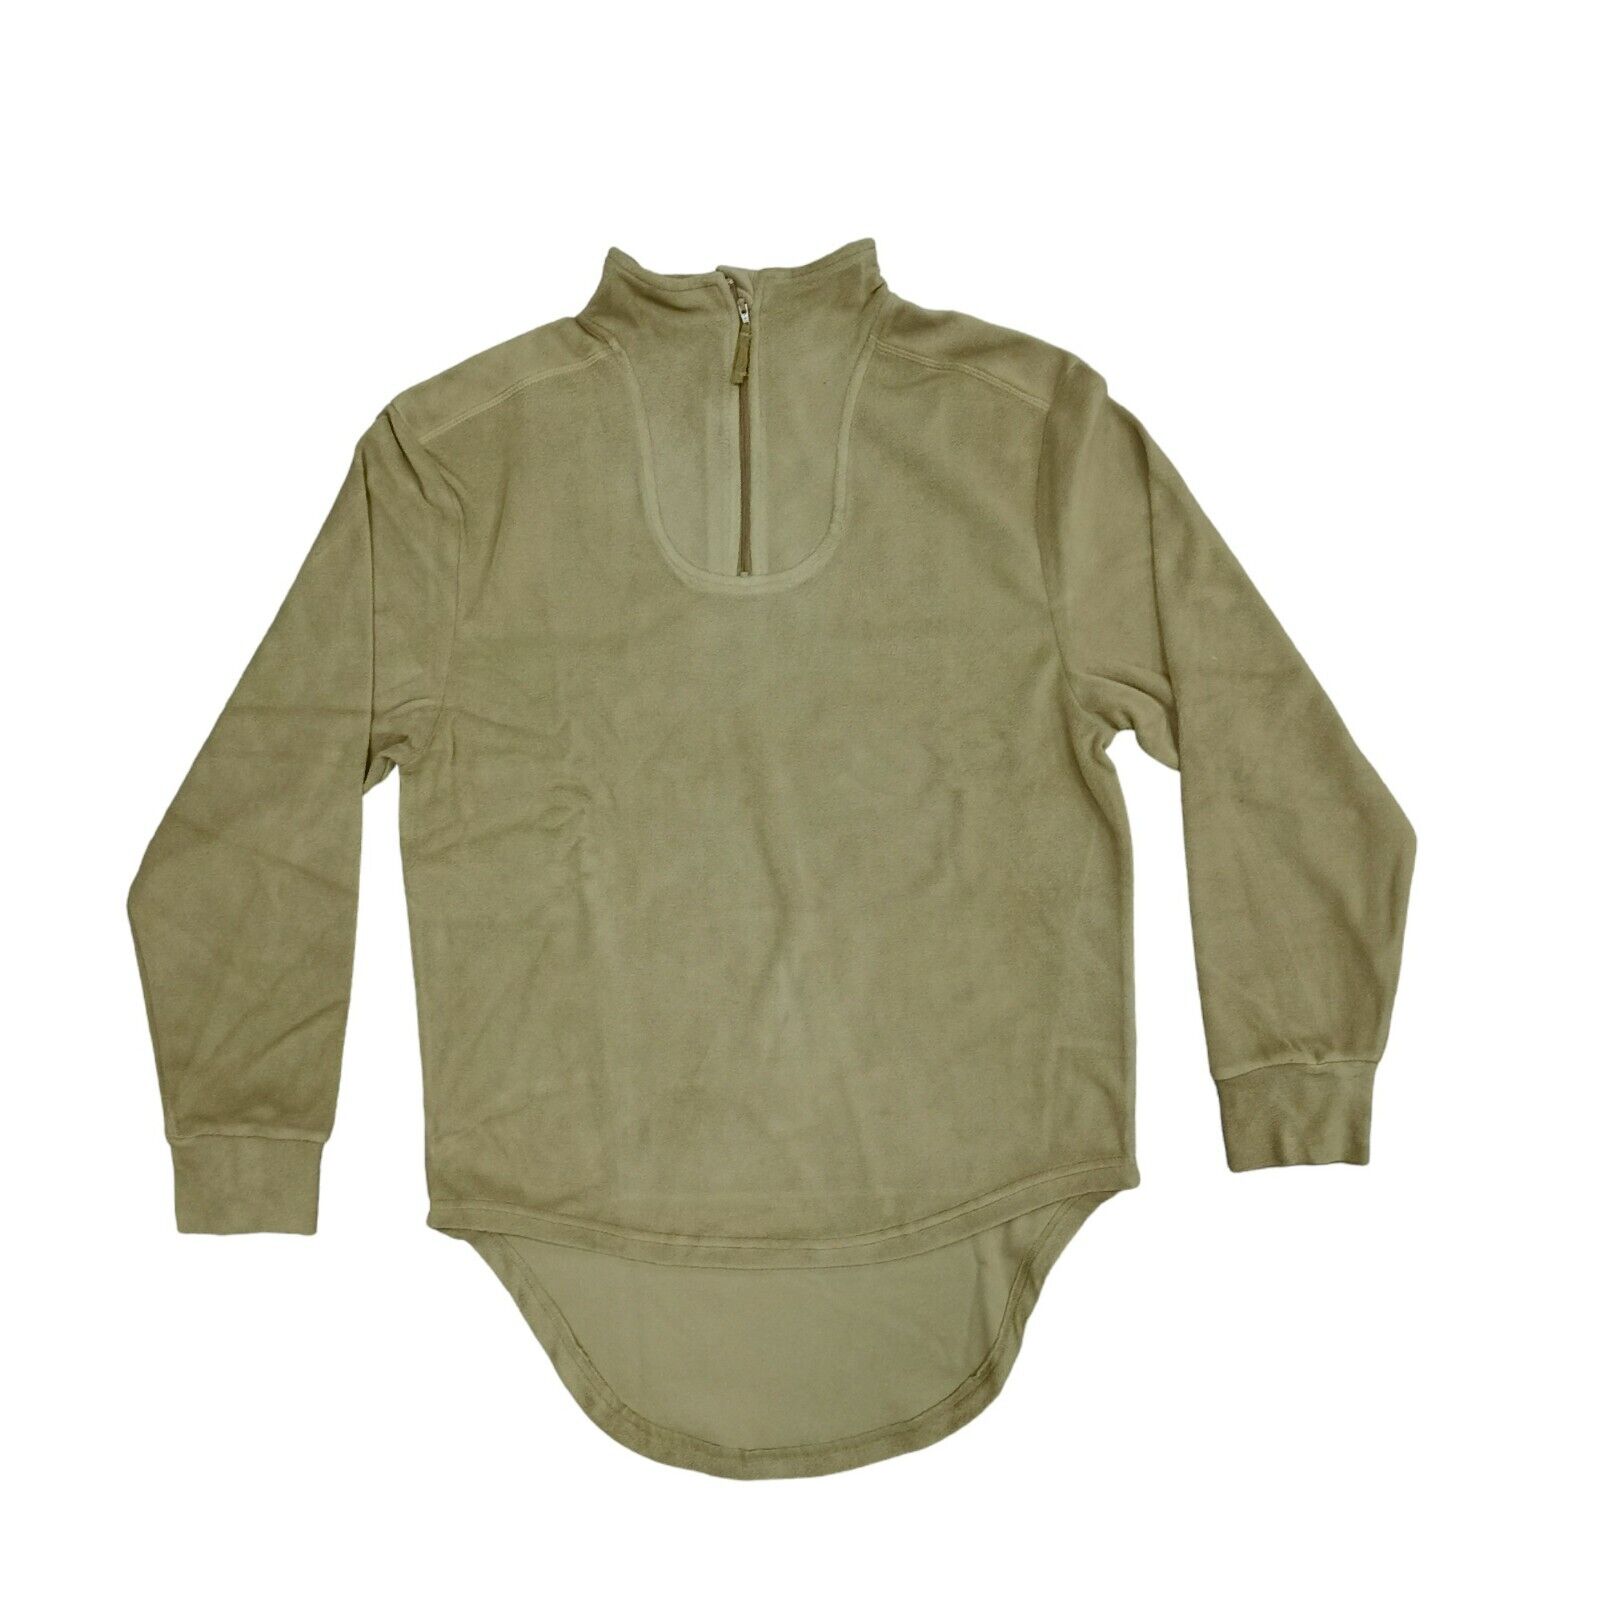 Genuine British Army PCS Cold Weather Thermal Fleece Norgi Undershirt Base Layer